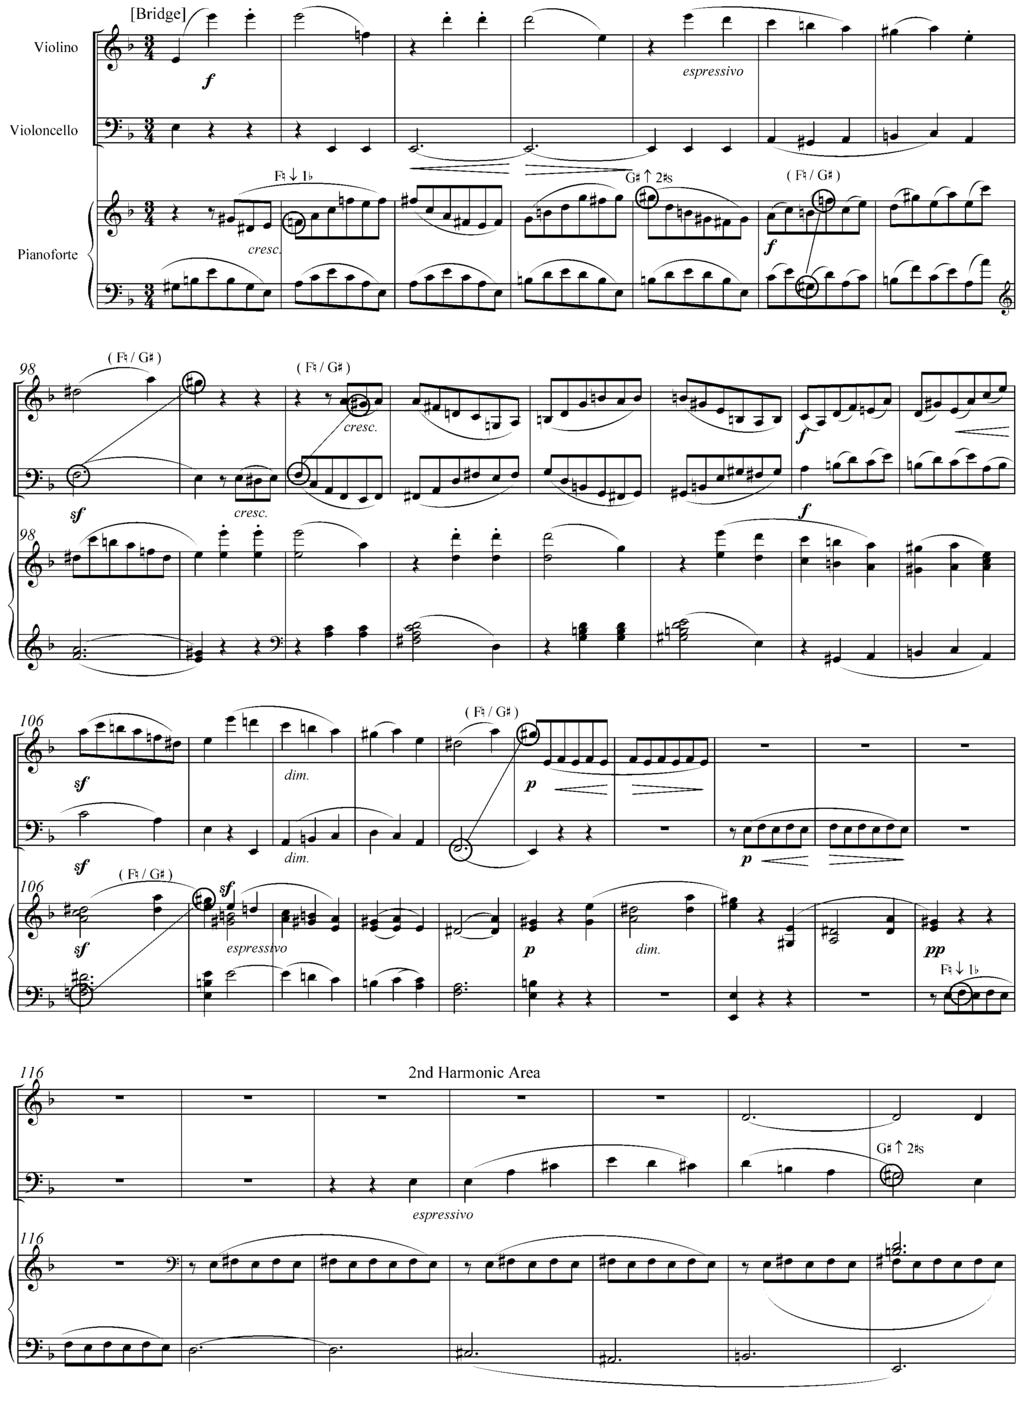 359 EXAMPLE 7.1a: Mendelssohn, Piano Trio in D minor, Op. 49, 1 st Bridge into 2 nd Harmonic Area (mm.